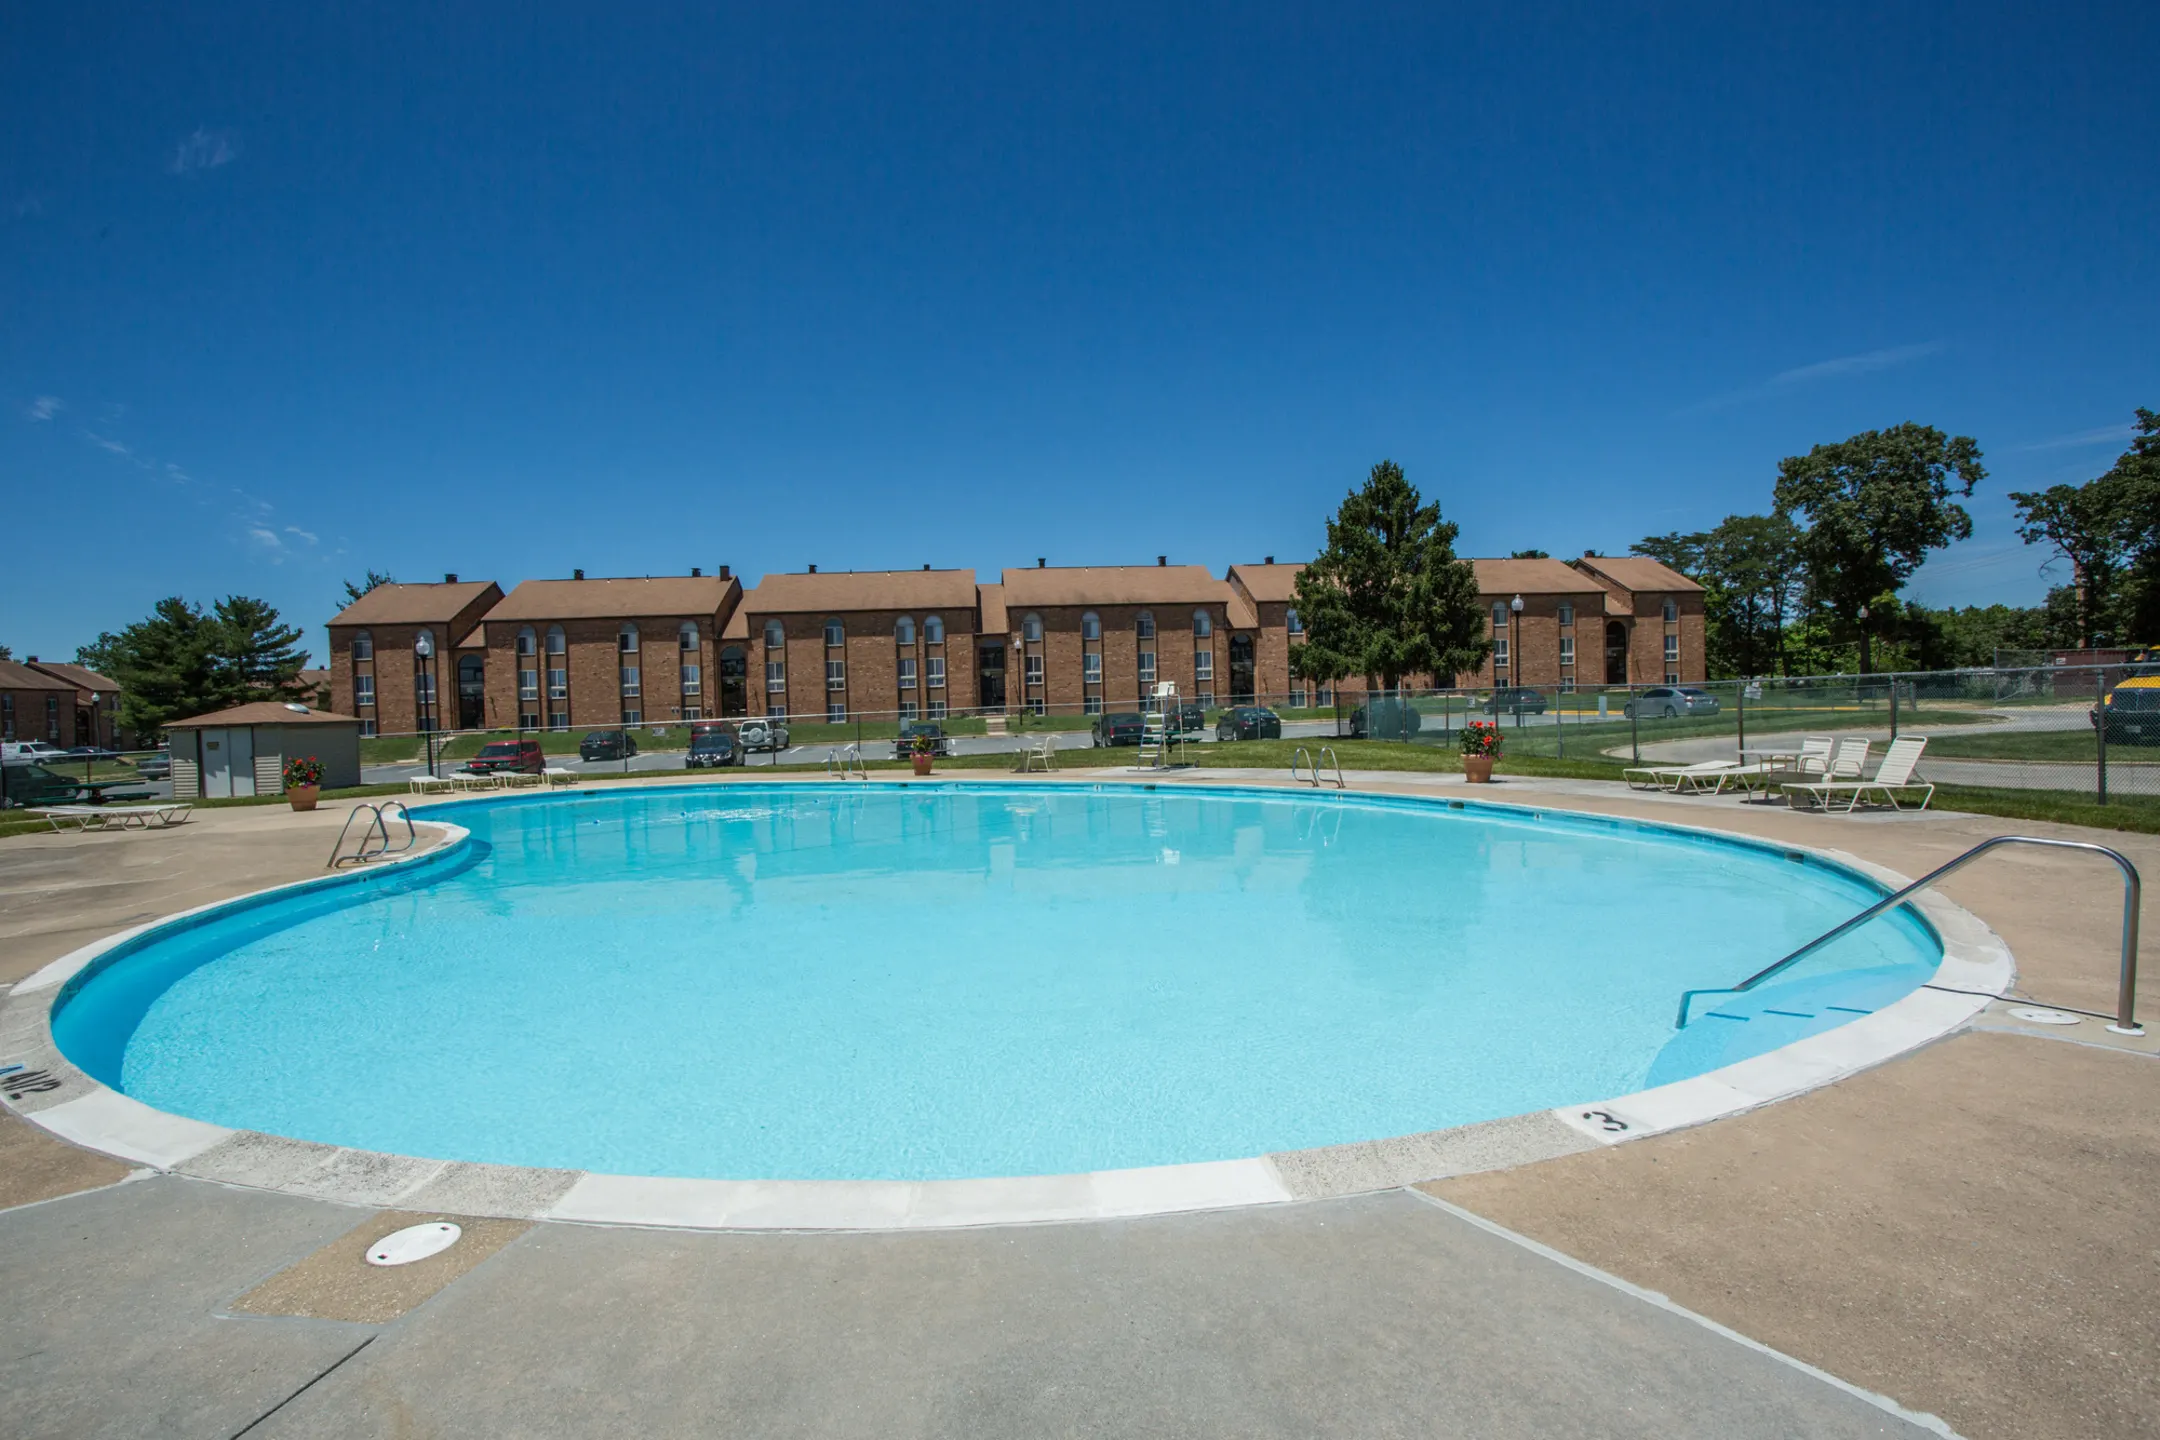 Pool - Tuscany Gardens - Windsor Mill, MD